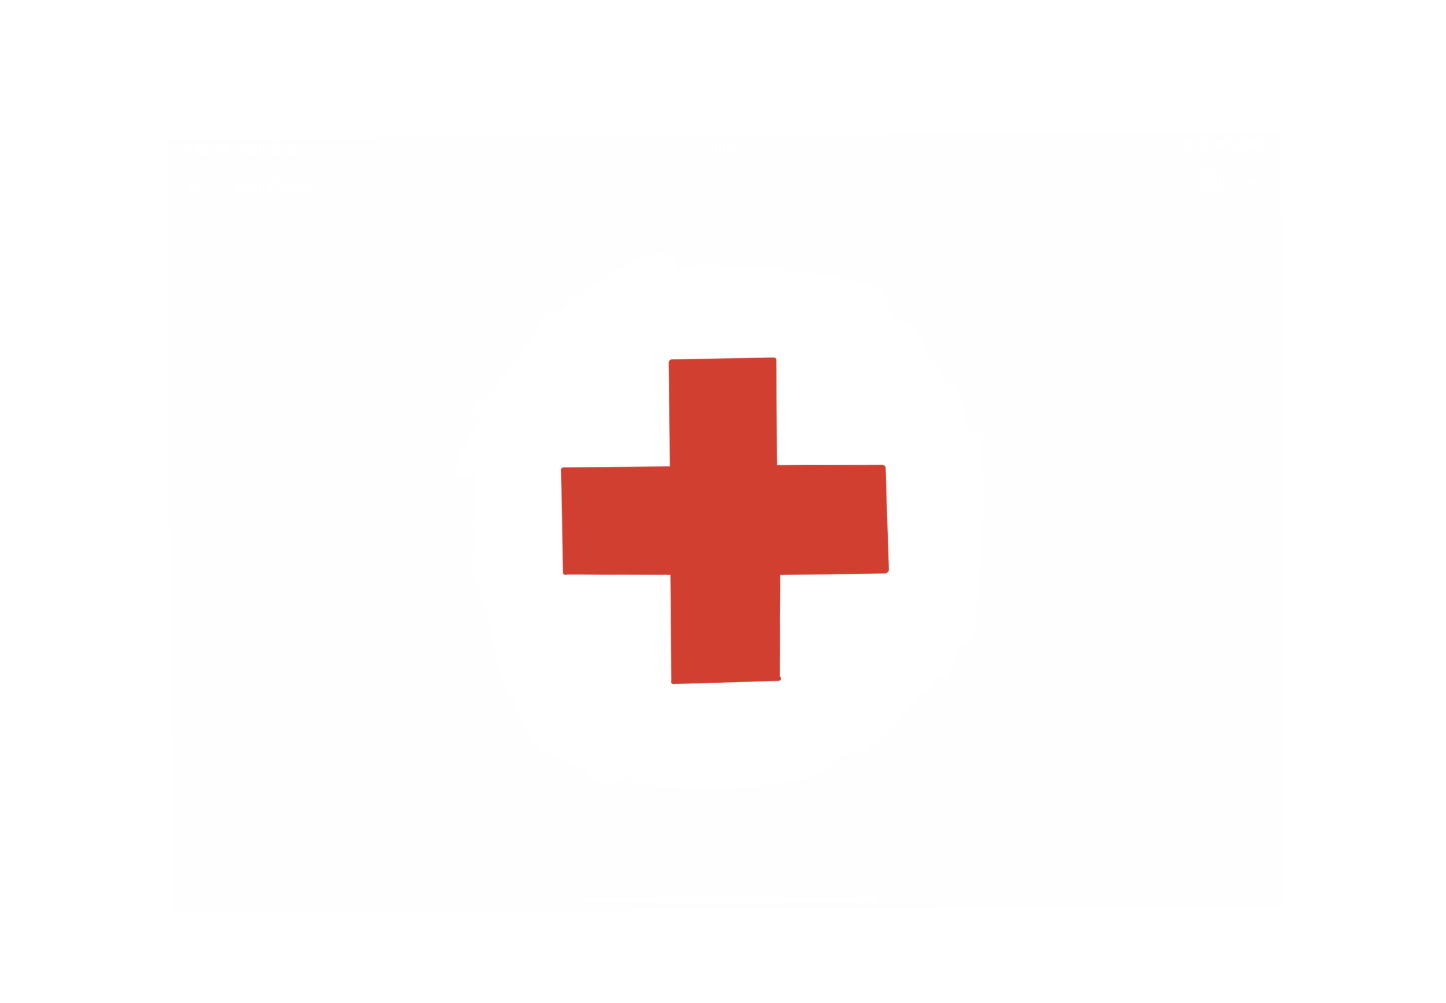 Red Cross Club